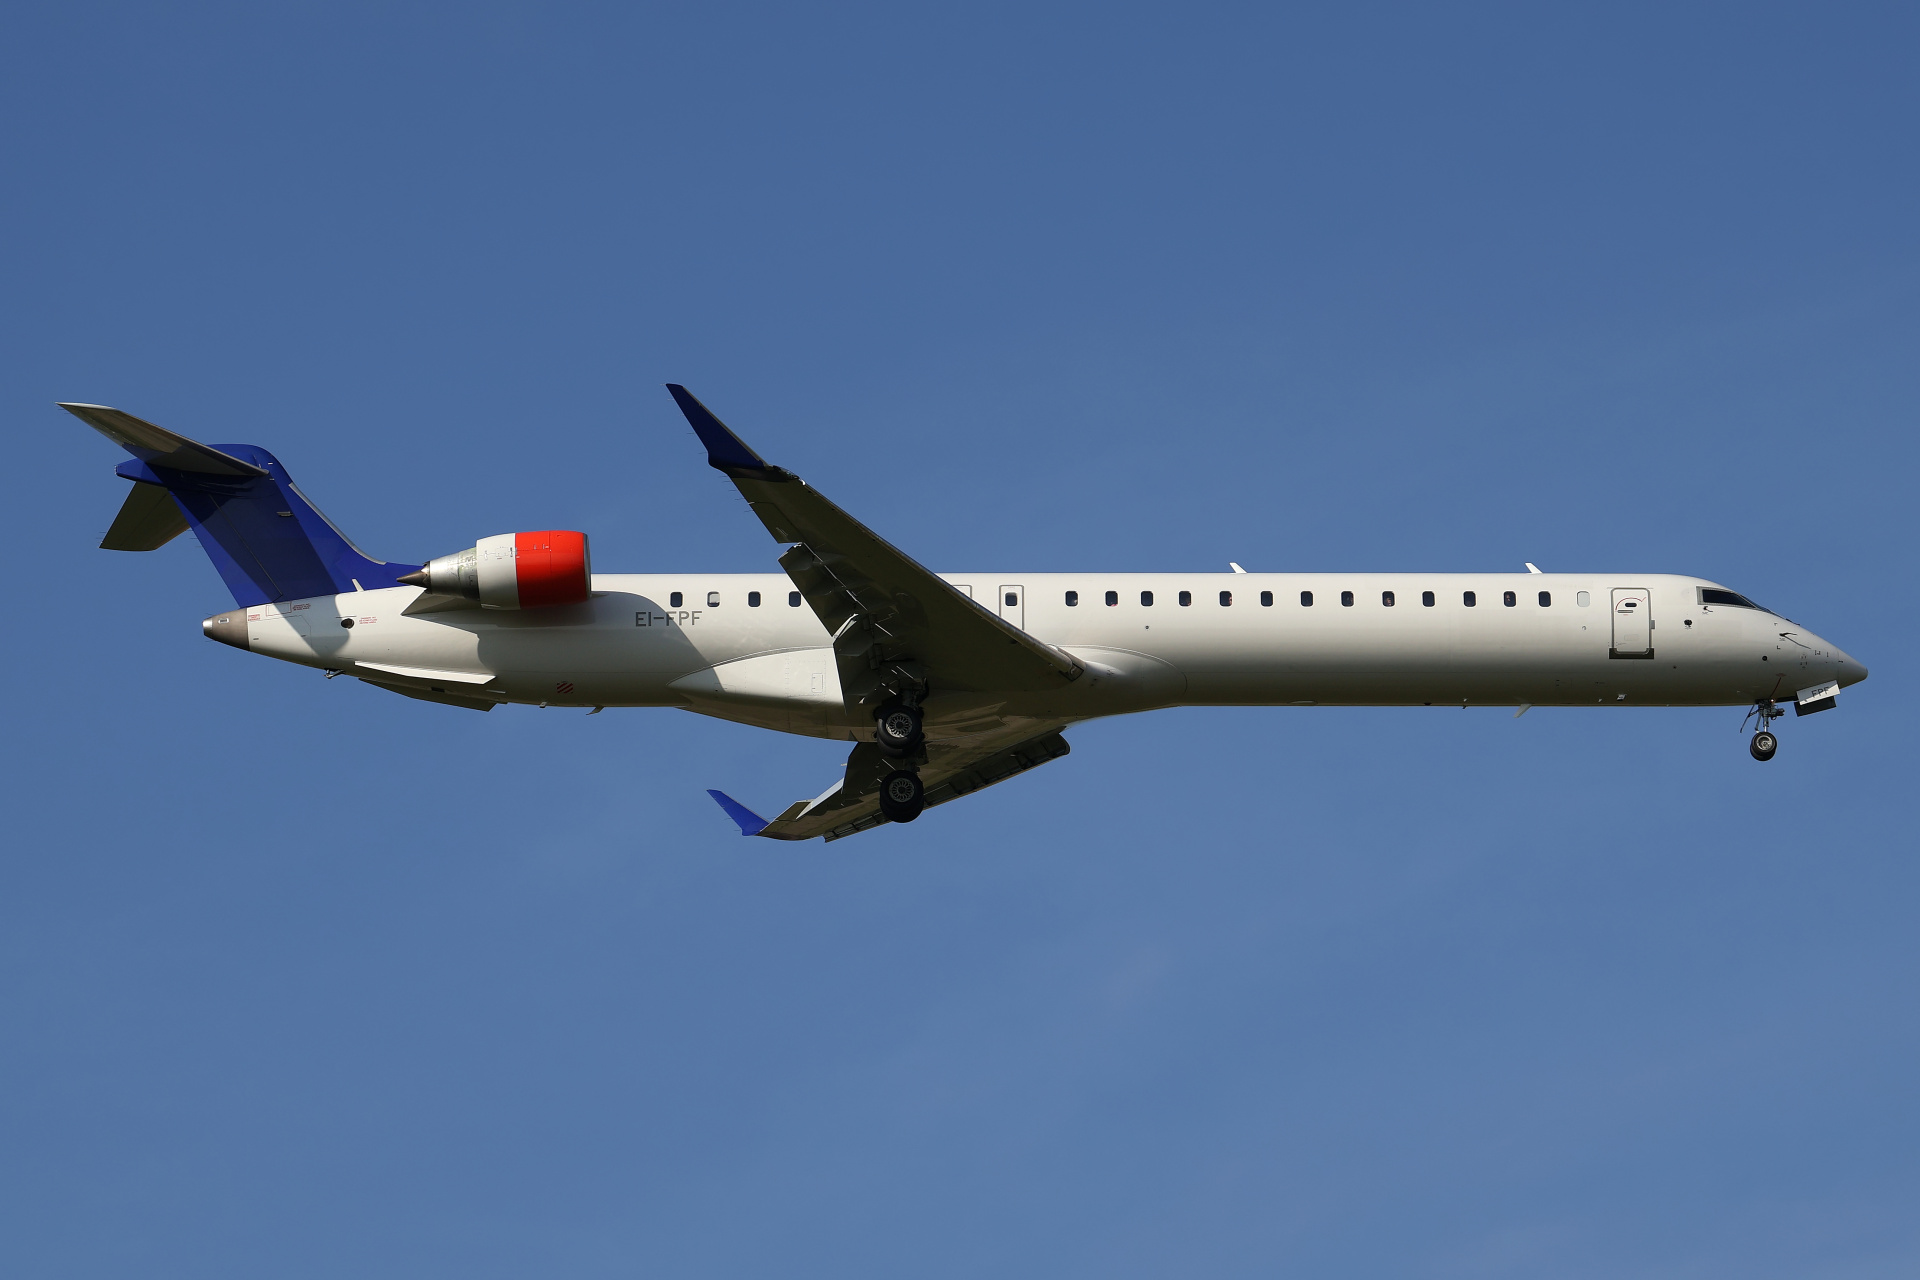 EI-FPF (partial livery, CityJet) (Aircraft » EPWA Spotting » Mitsubishi Regional Jet » CRJ-900 » SAS Scandinavian Airlines)